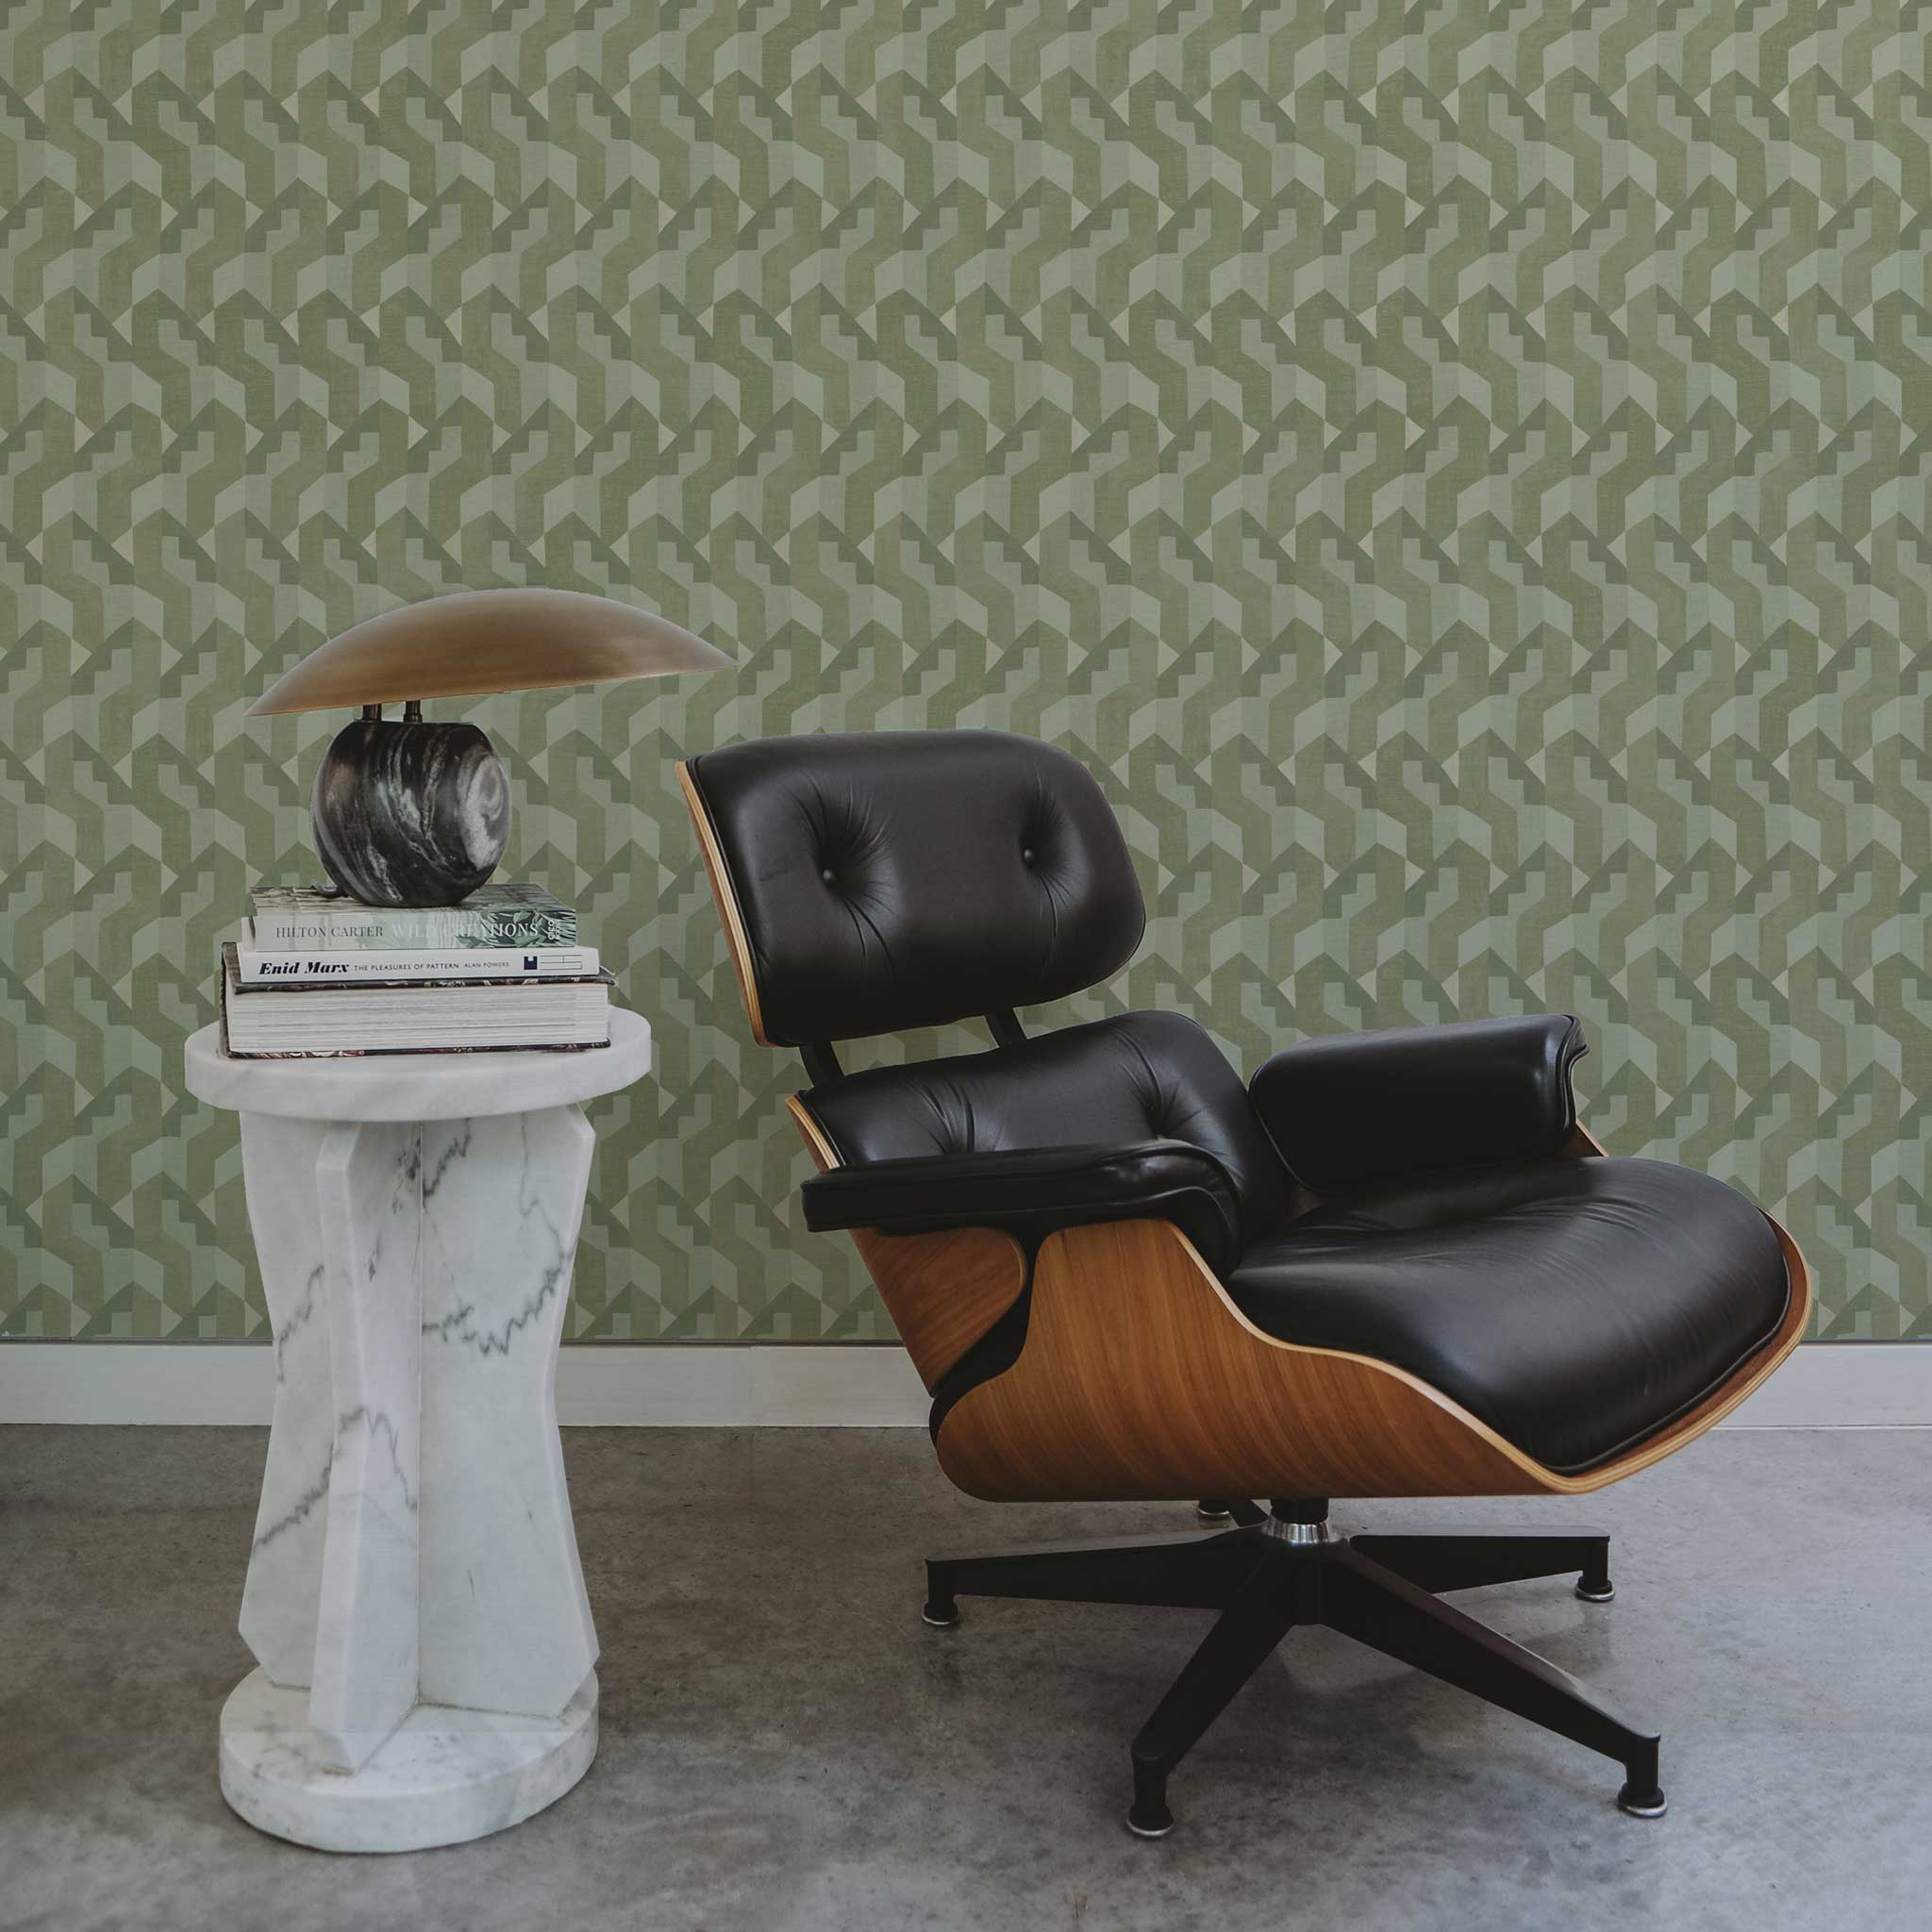 Habita wallpaper design - green Gio pattern in home office